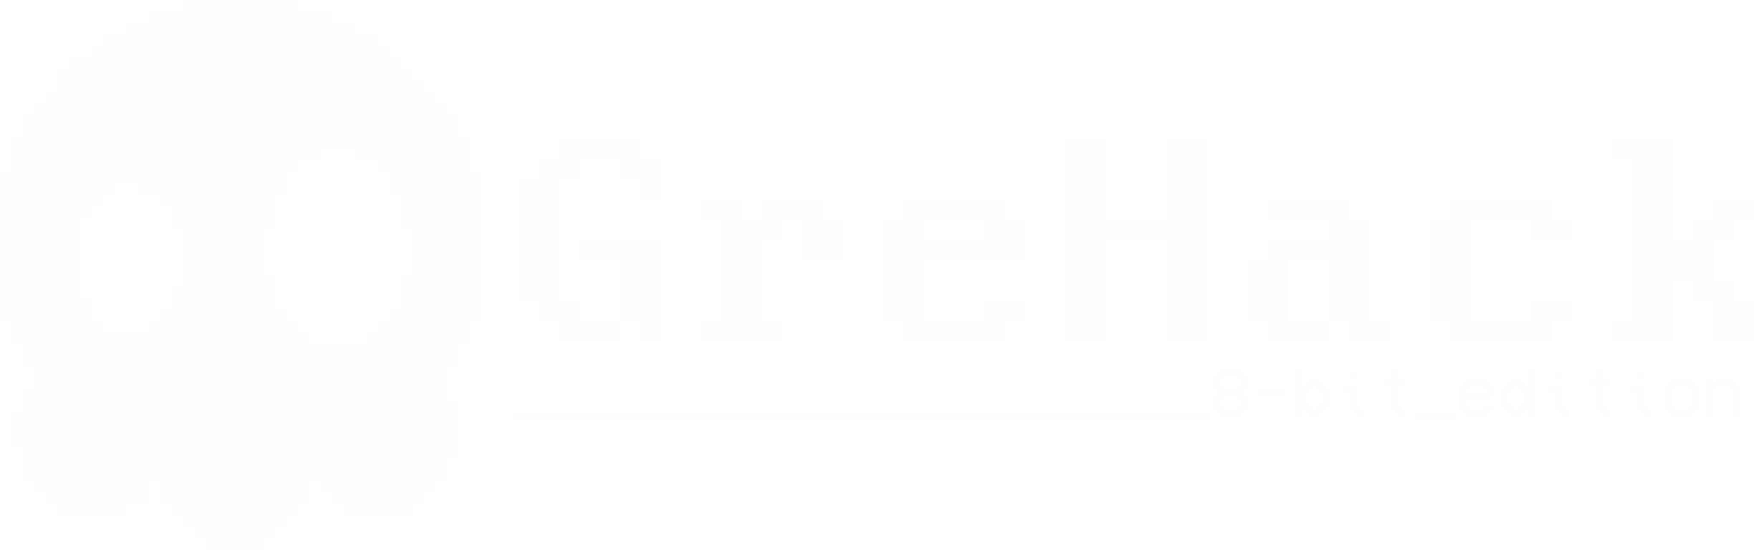 GreHack 8-bit edition